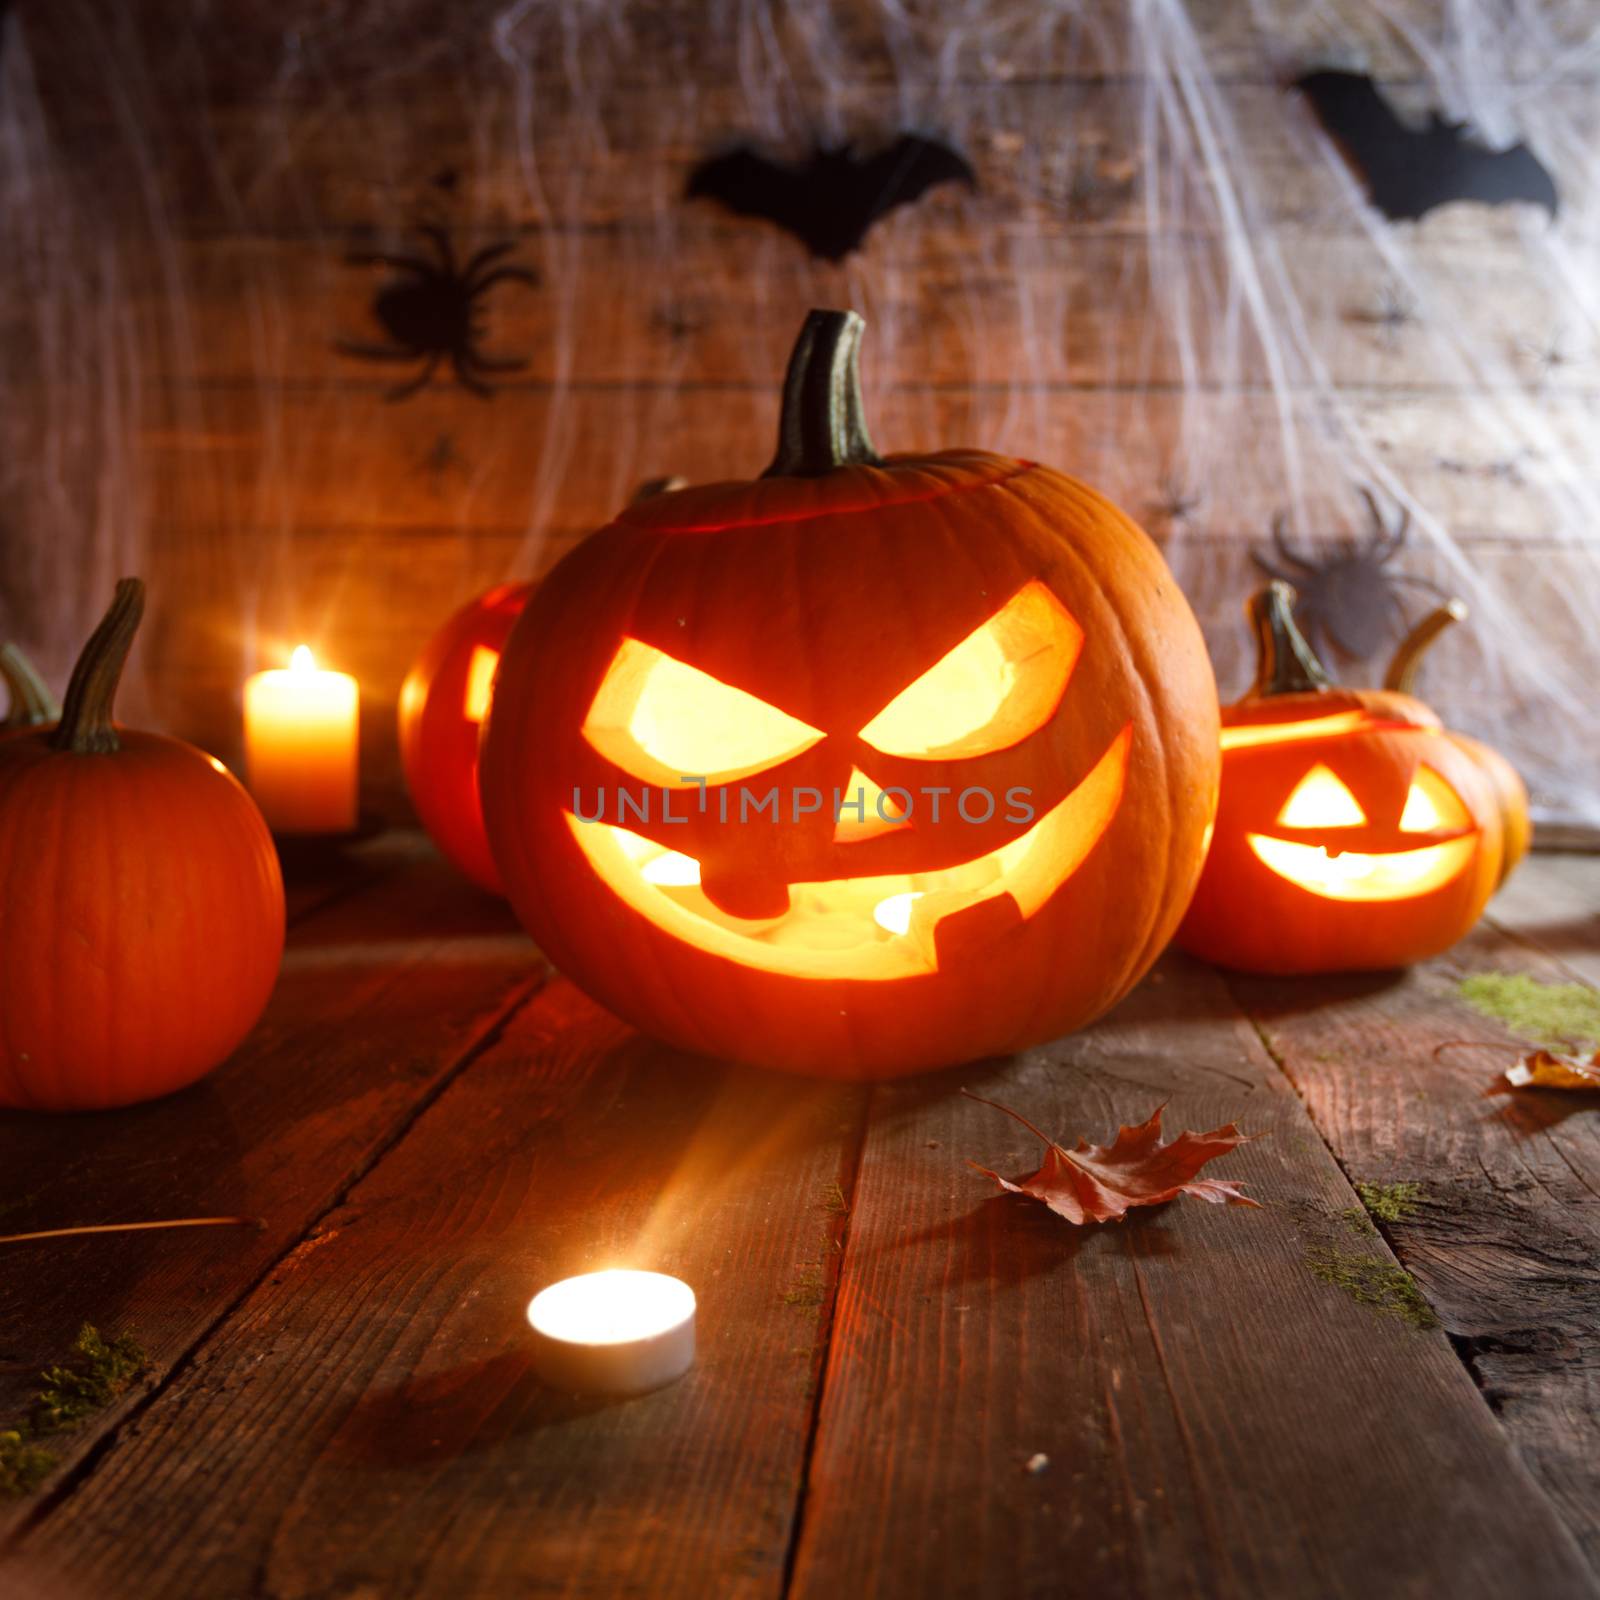 Jack O Lantern Halloween pumpkins, spiders on web , bats and burning candles